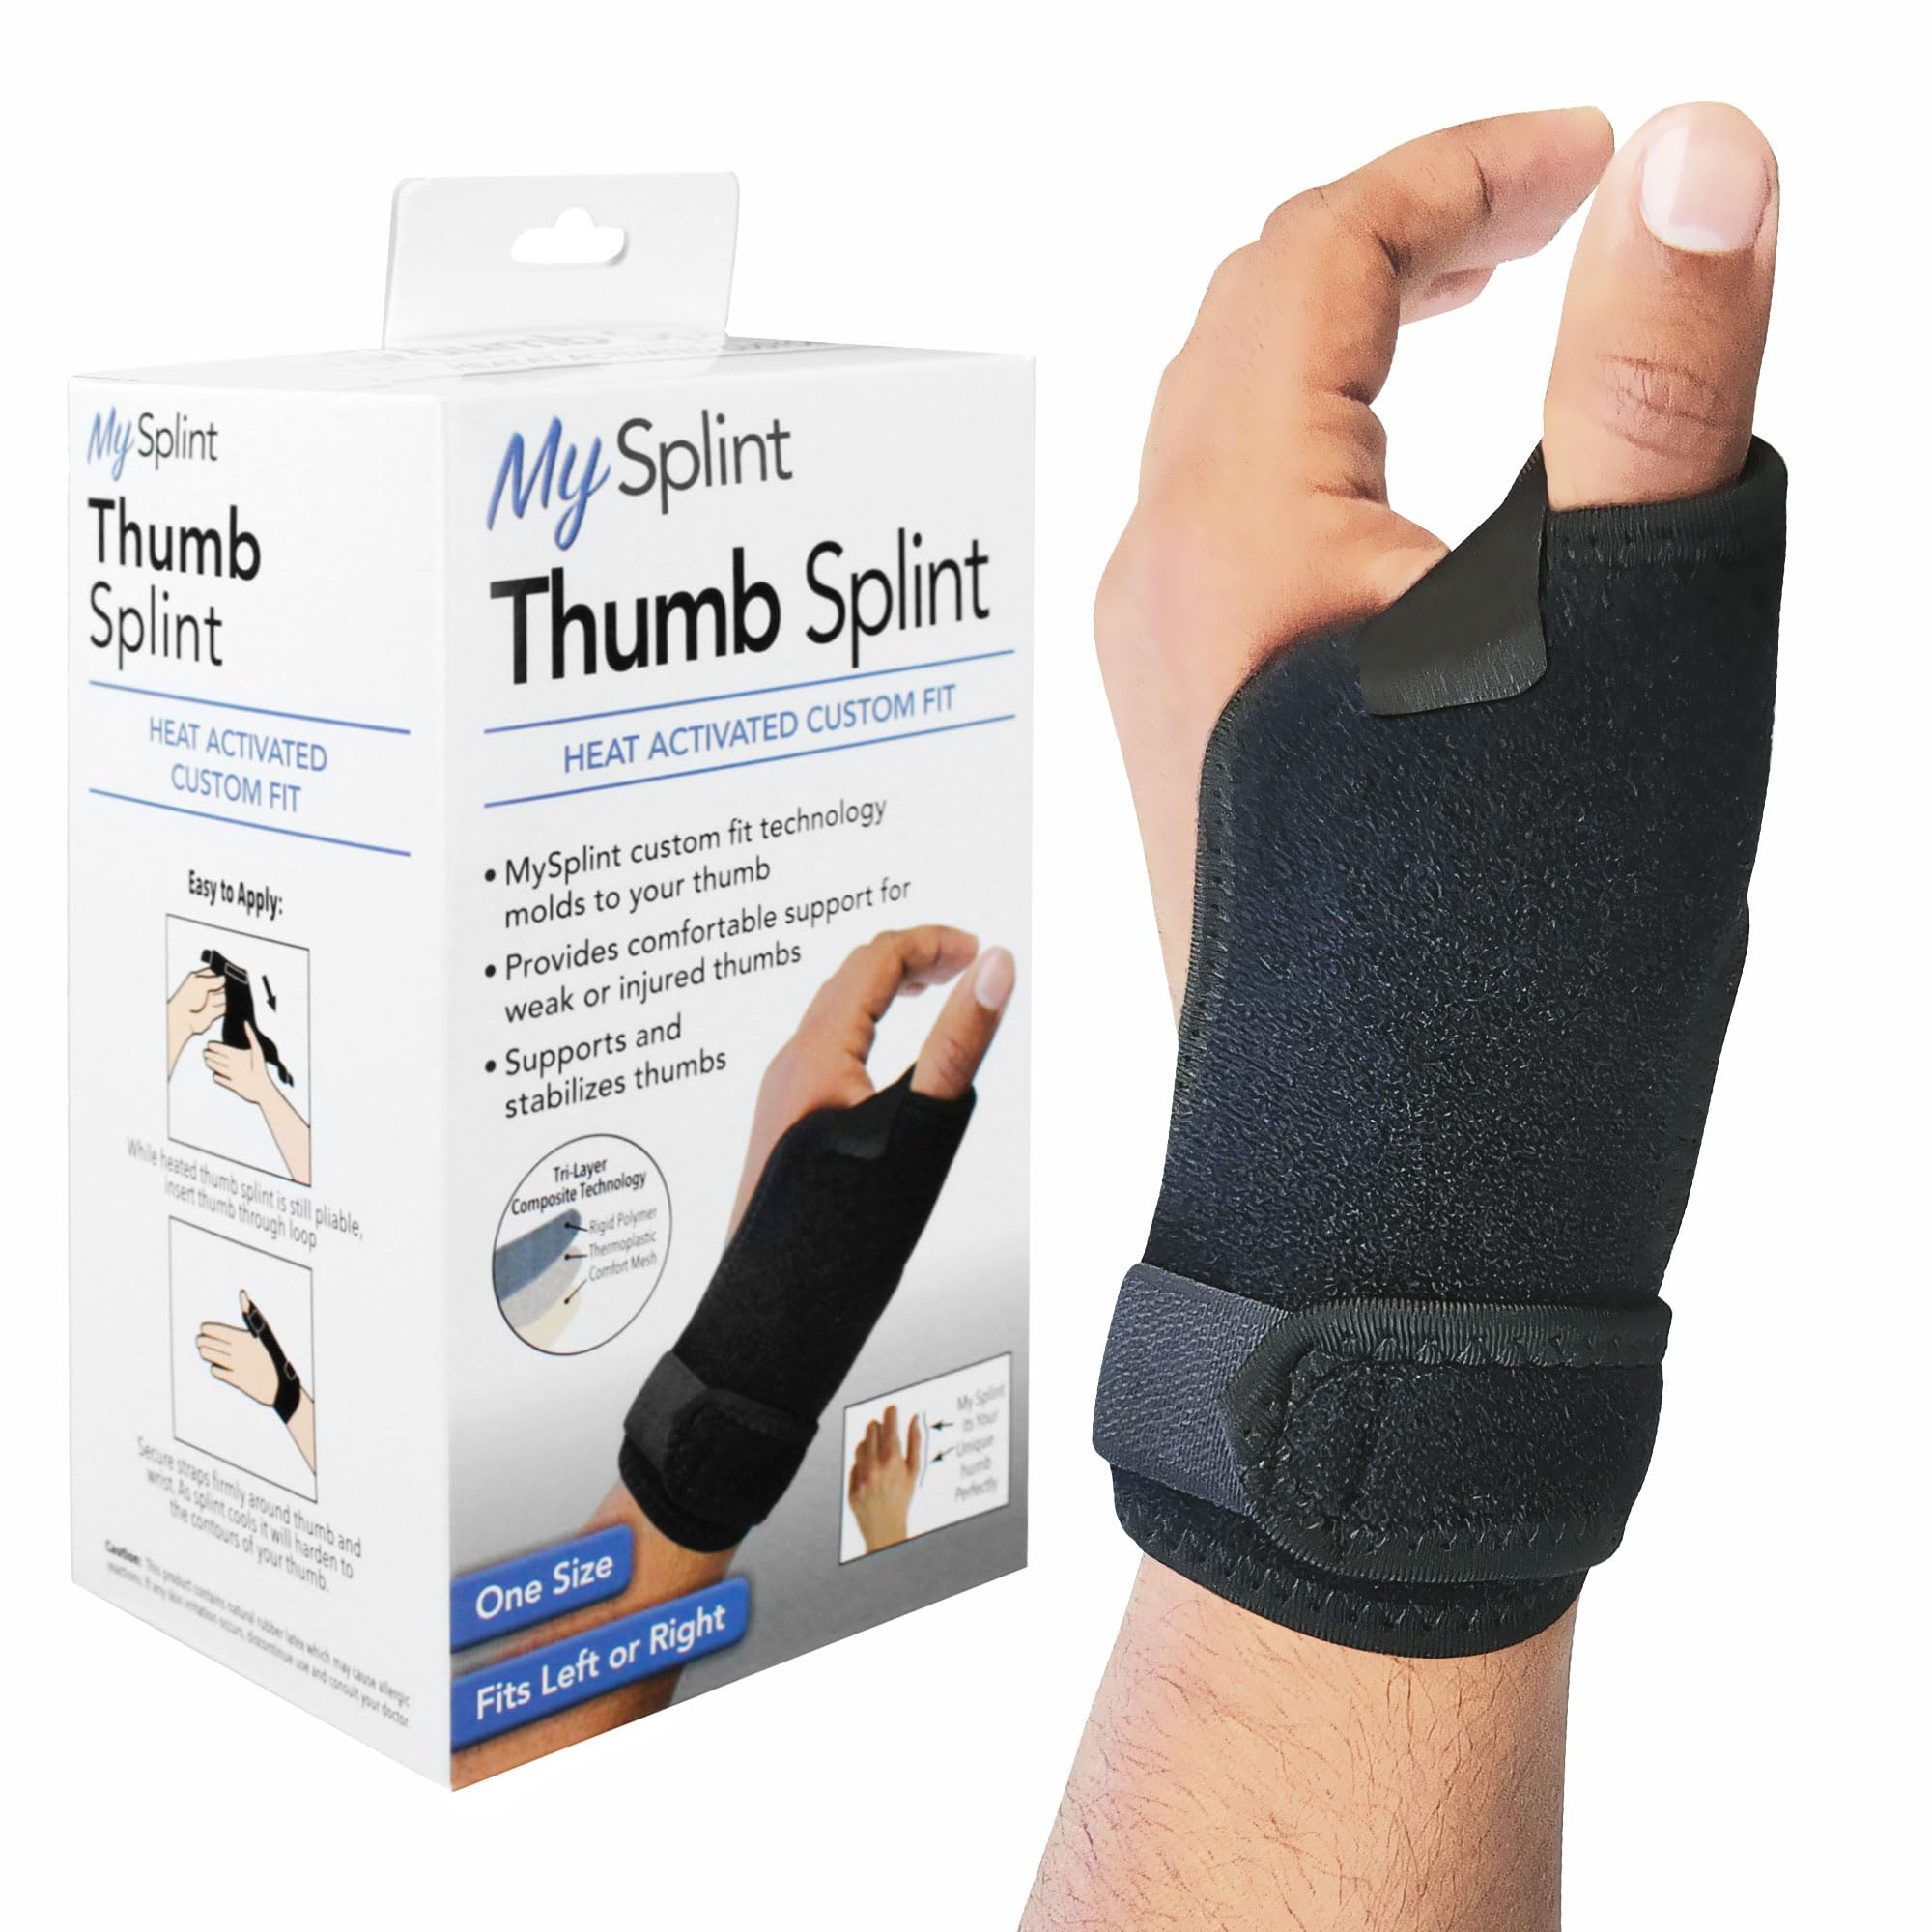 MySplint Custom Fit Thumb Splint, Moldable Thermoplastic Thumb Brace for Strains, Sprains, Thumb Injury and More, One Size